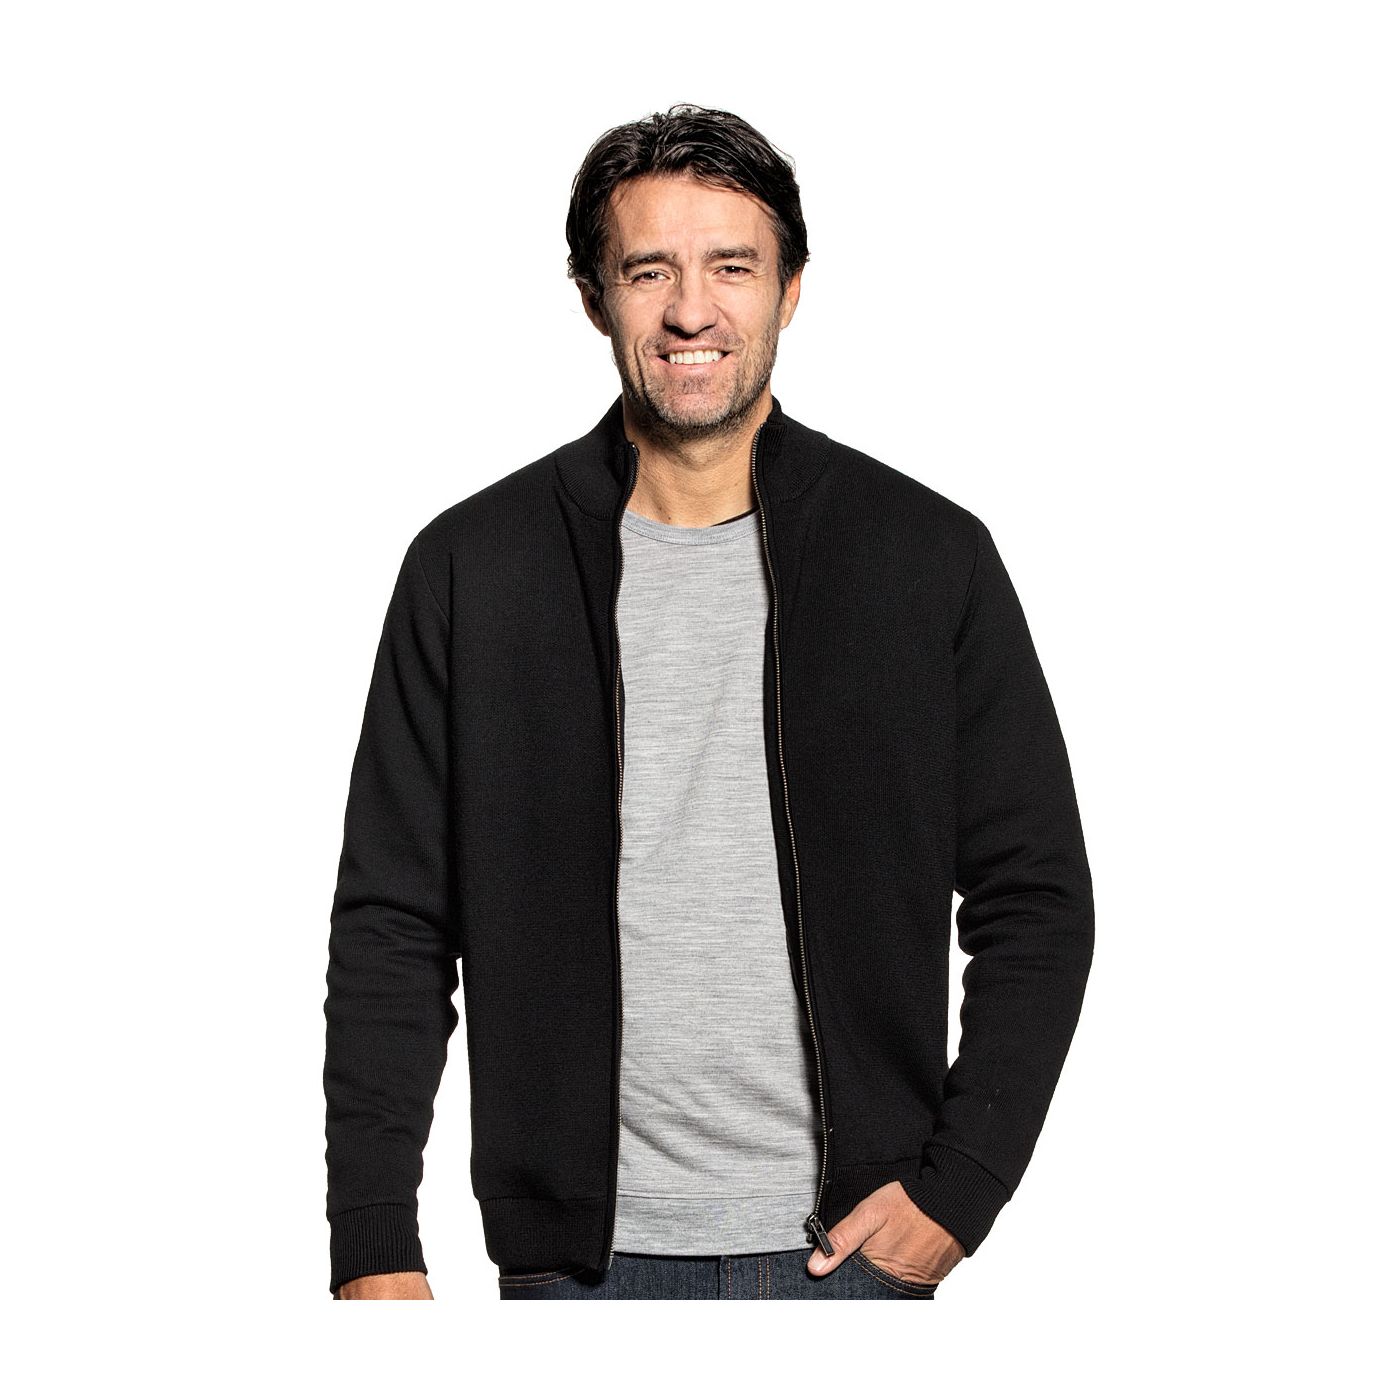 Jacket for men made of Merino wool in Black